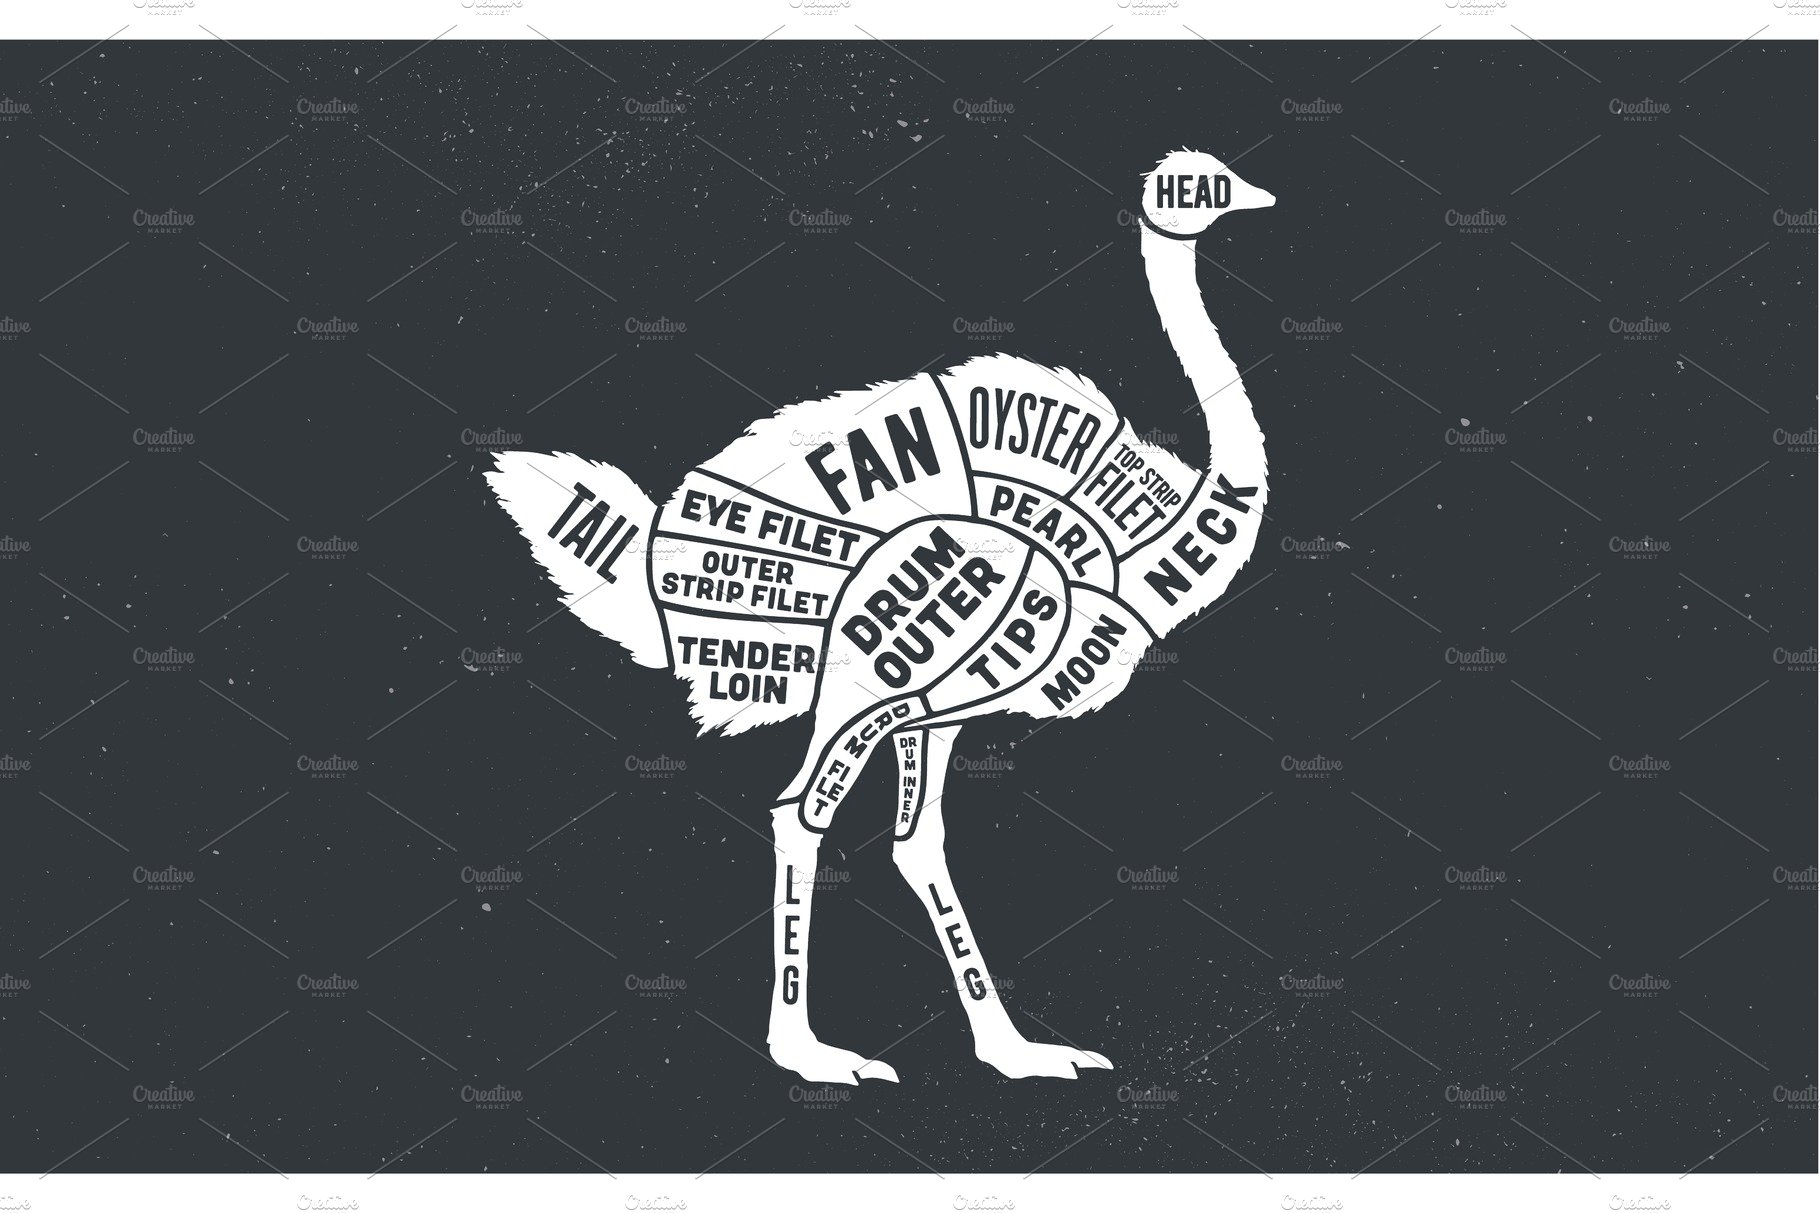 Ostrich. Butcher guide scheme cover image.